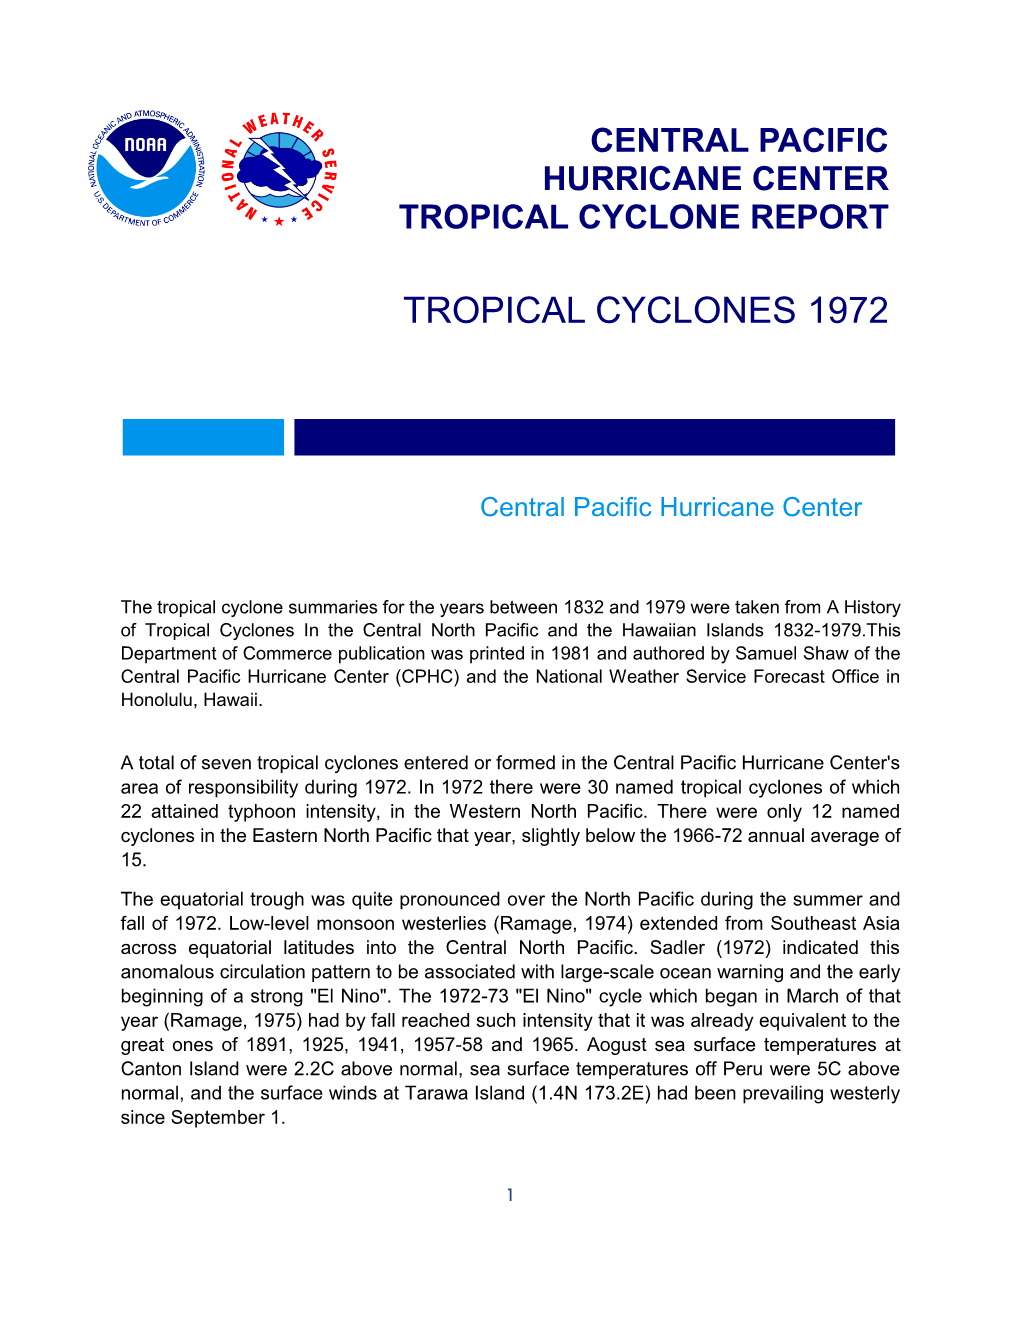 Tropical Cyclones 1972